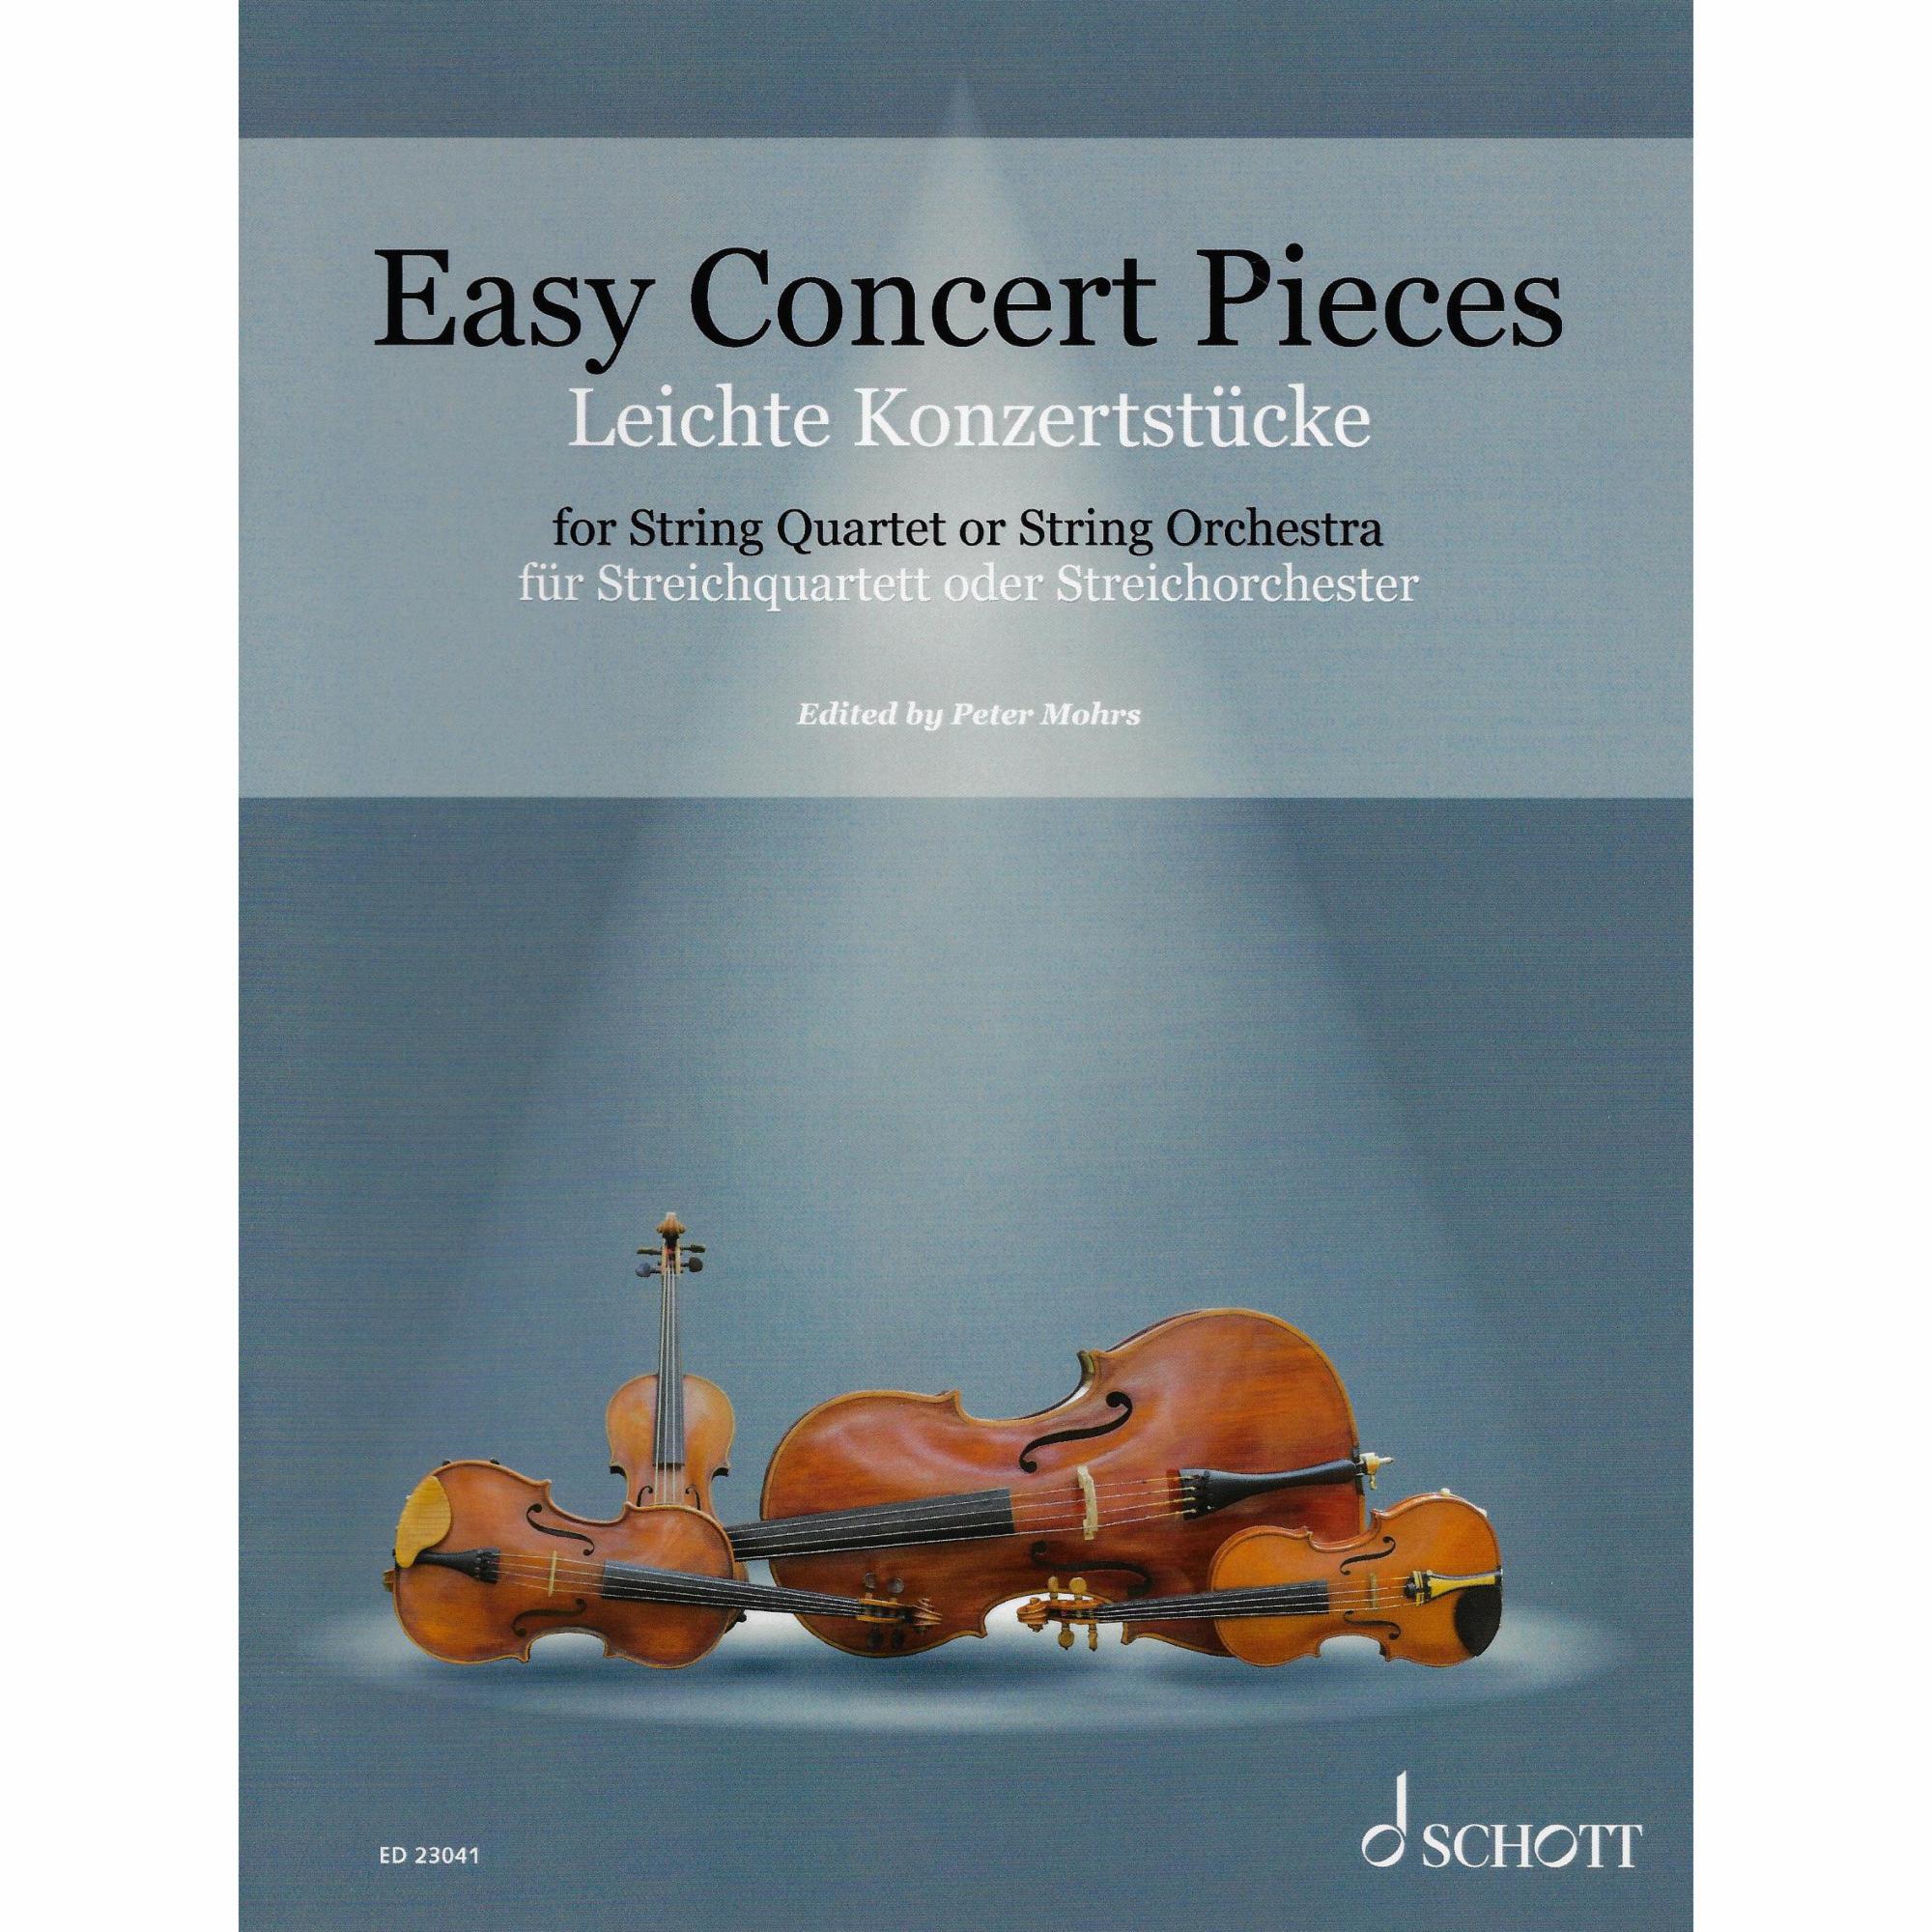 Easy Concert Pieces for String Quartet